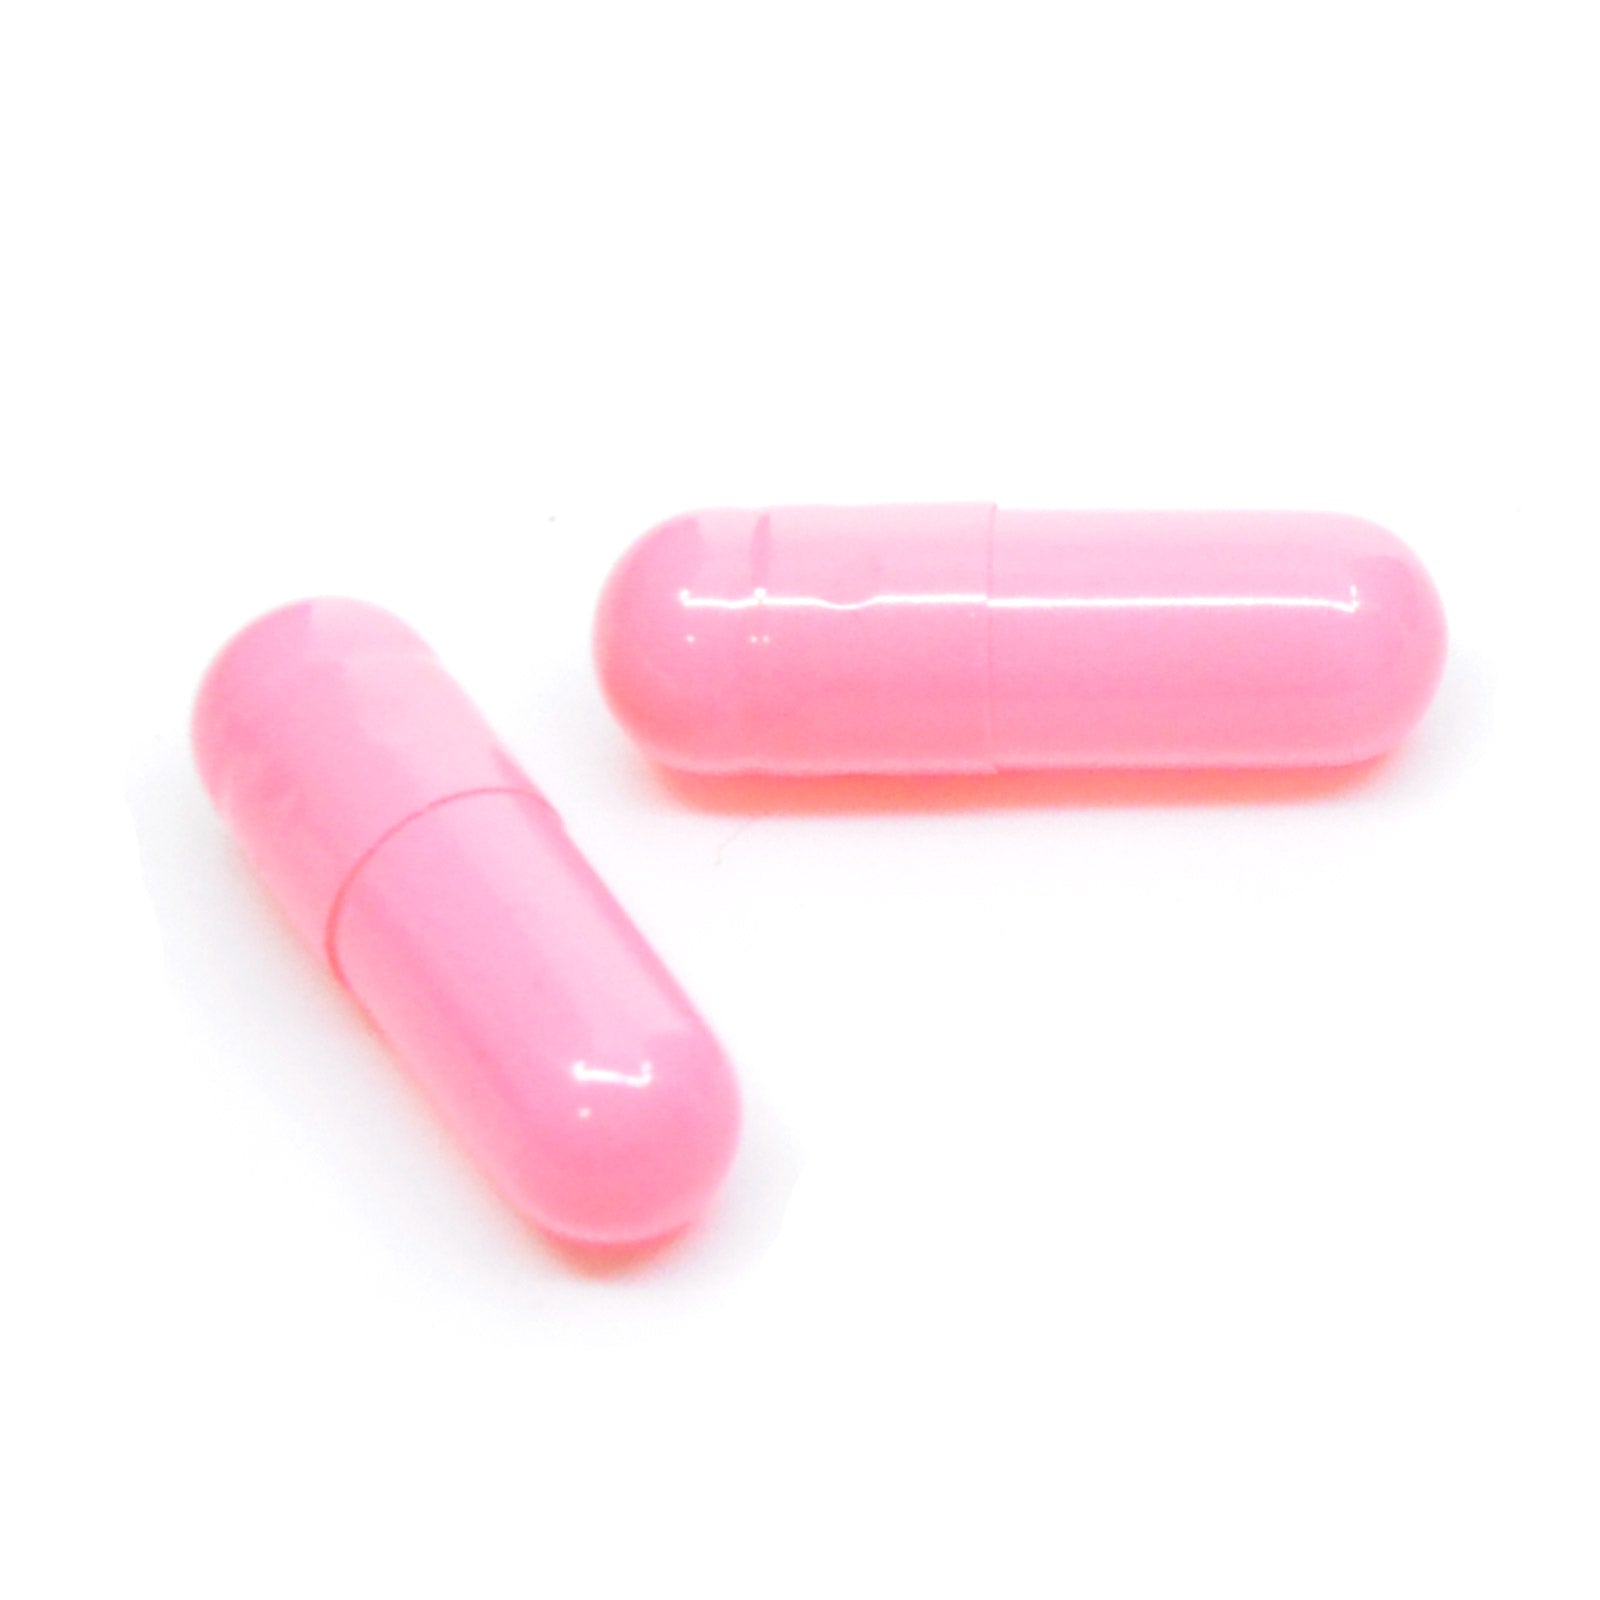 Size #0-Pink/Pink - Gelatin Capsules